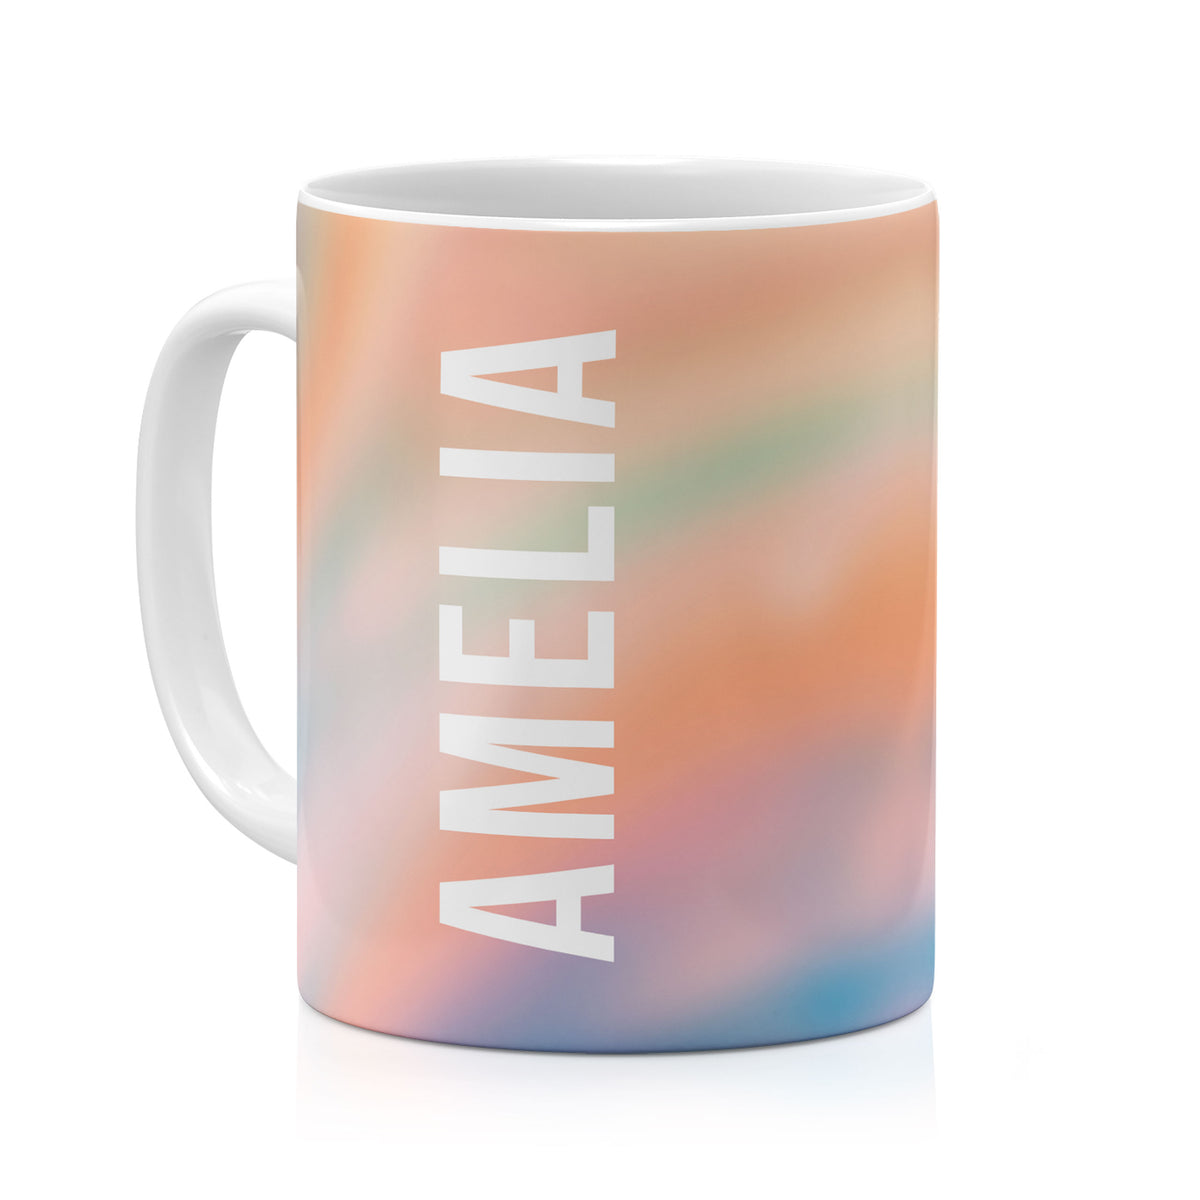 Personalised Ceramic Mug with Name Initials Text Prismatic Pastel Orange Green Blue